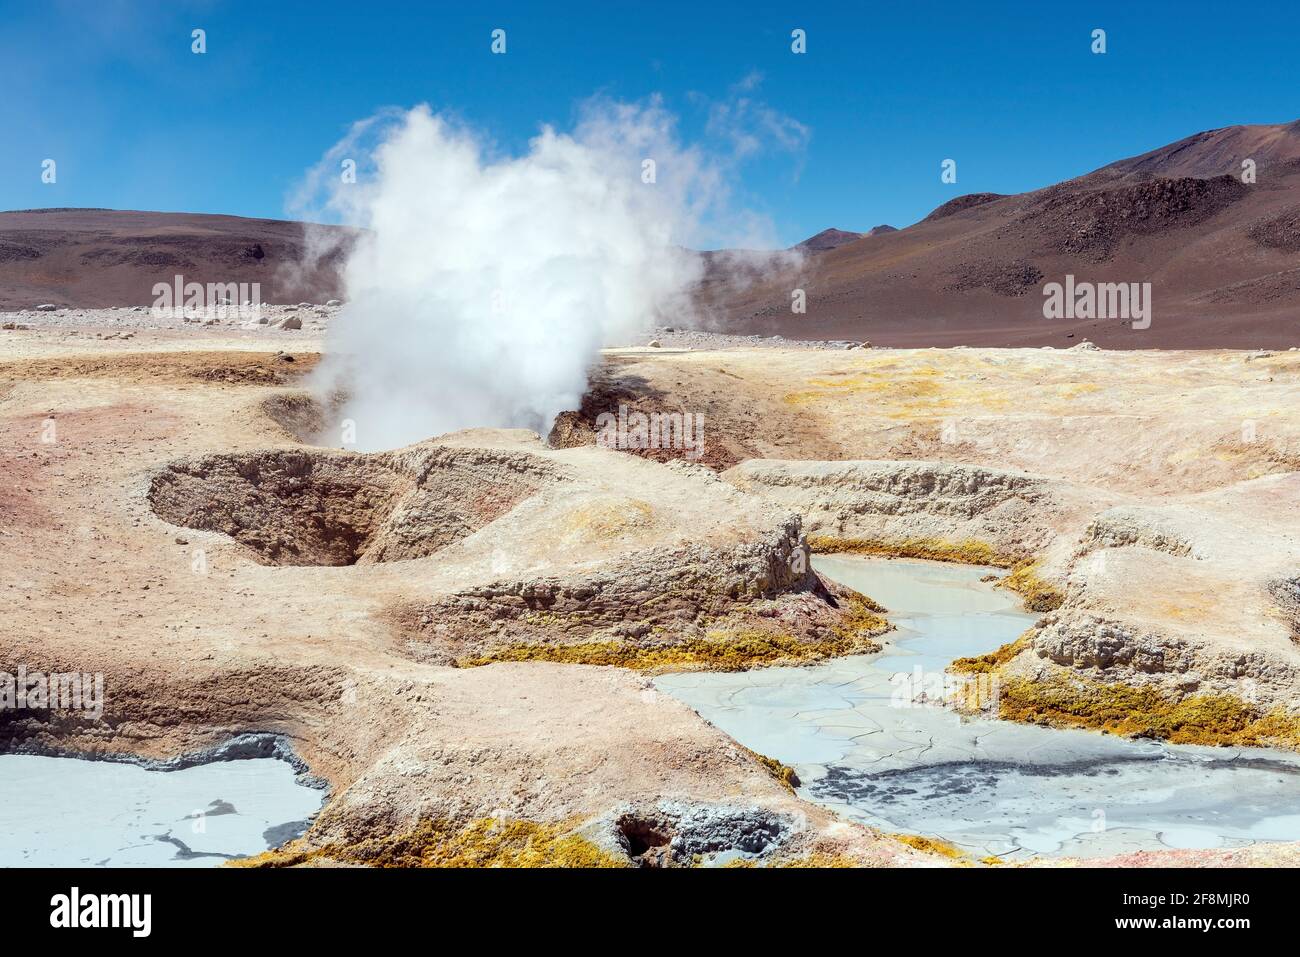 Vulkanische Aktivität mit Fumarole, Geysir und Schlammgruben, Sol de Manana, Eduardo Avaroa National Reserve, Uyuni, Bolivien. Stockfoto